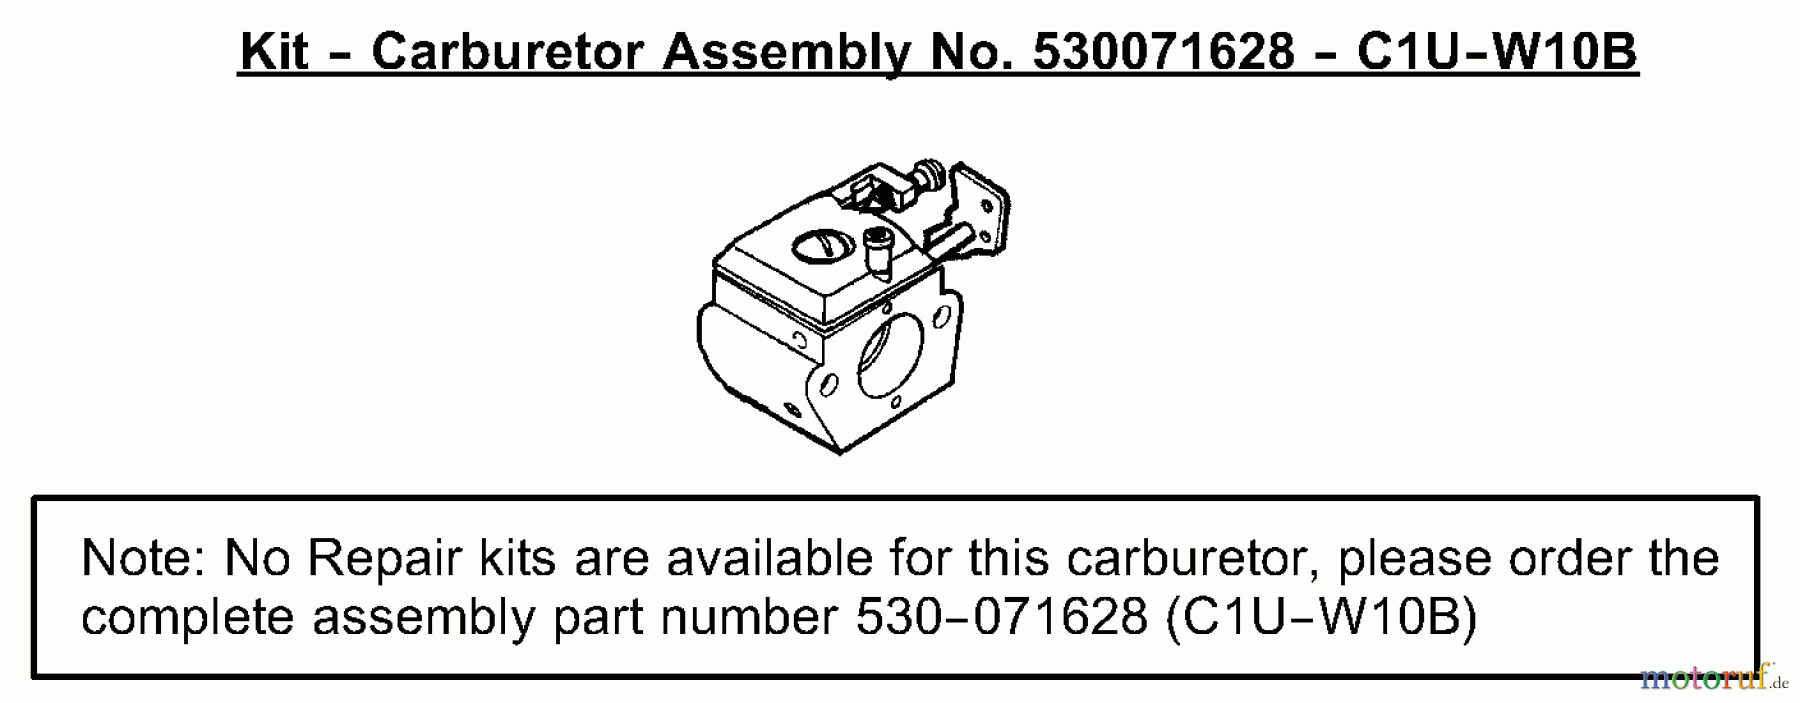  Poulan / Weed Eater Motorsensen, Trimmer SST (Type 1) - Weed Eater Featherlite LE String Trimmer Carburetor Assembly (C1U-W10B) P/N 530071628